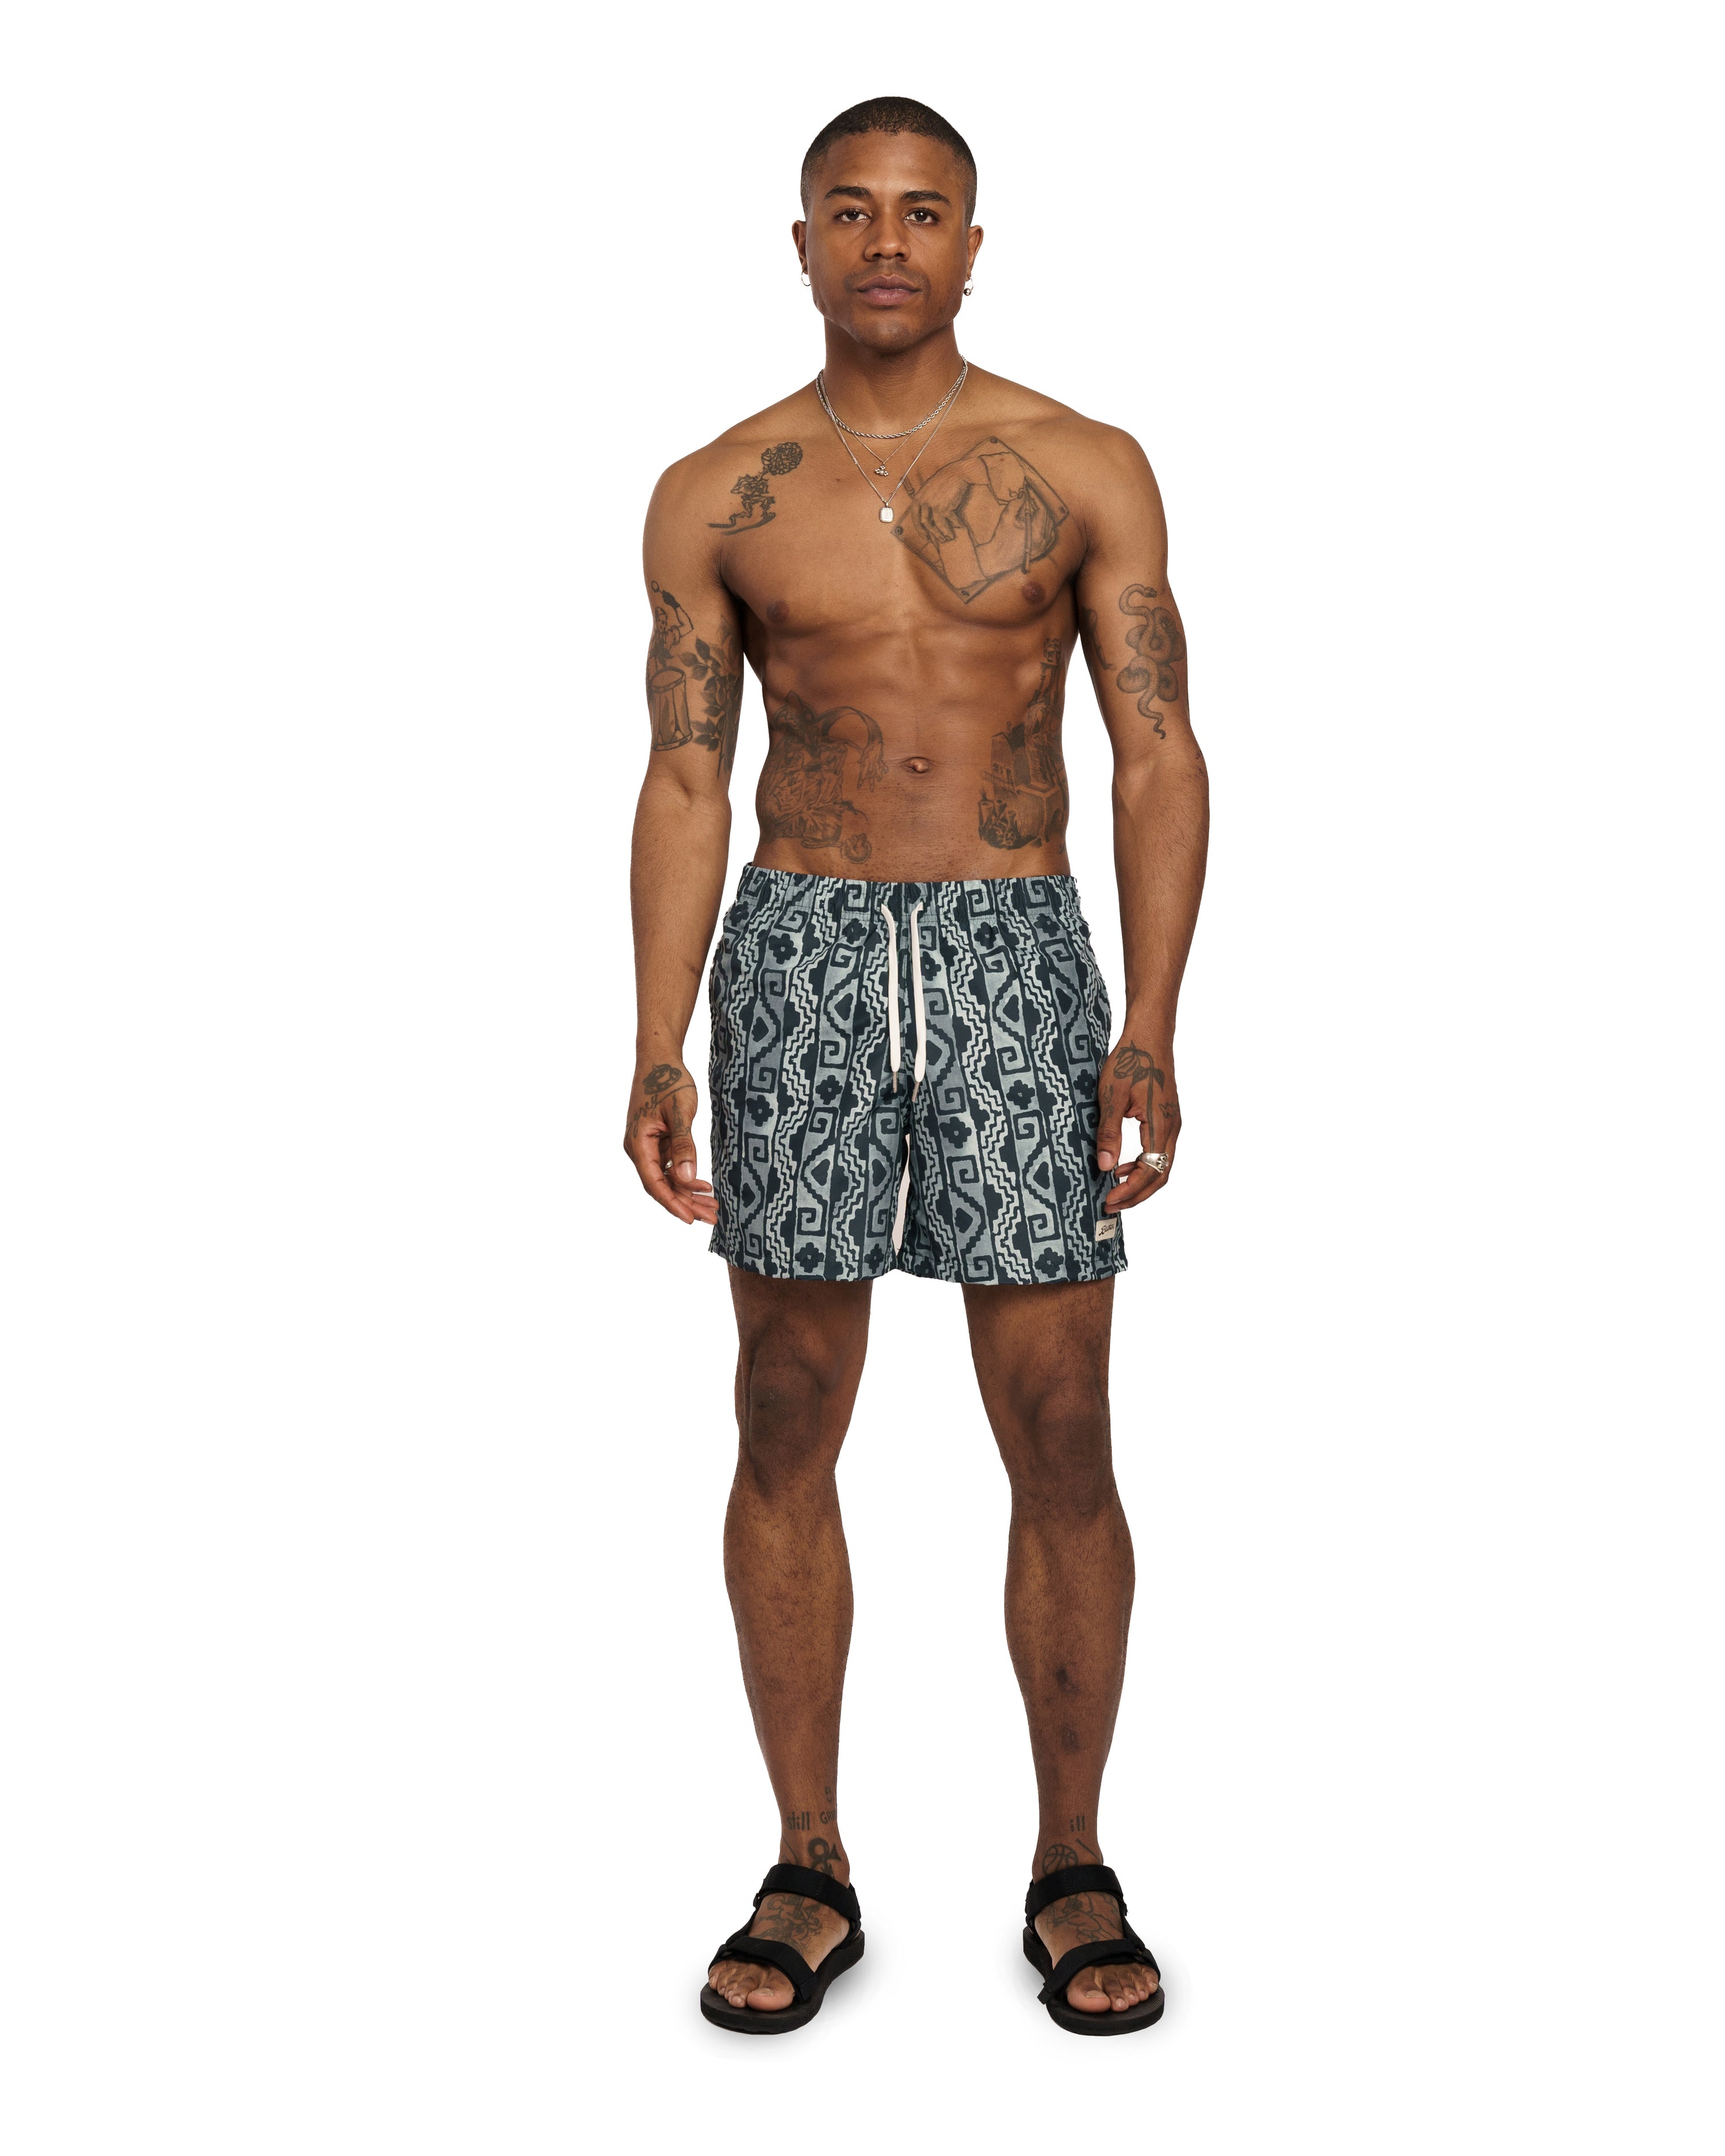 Model wearing Bather swim trunk with navy geometric pattern 